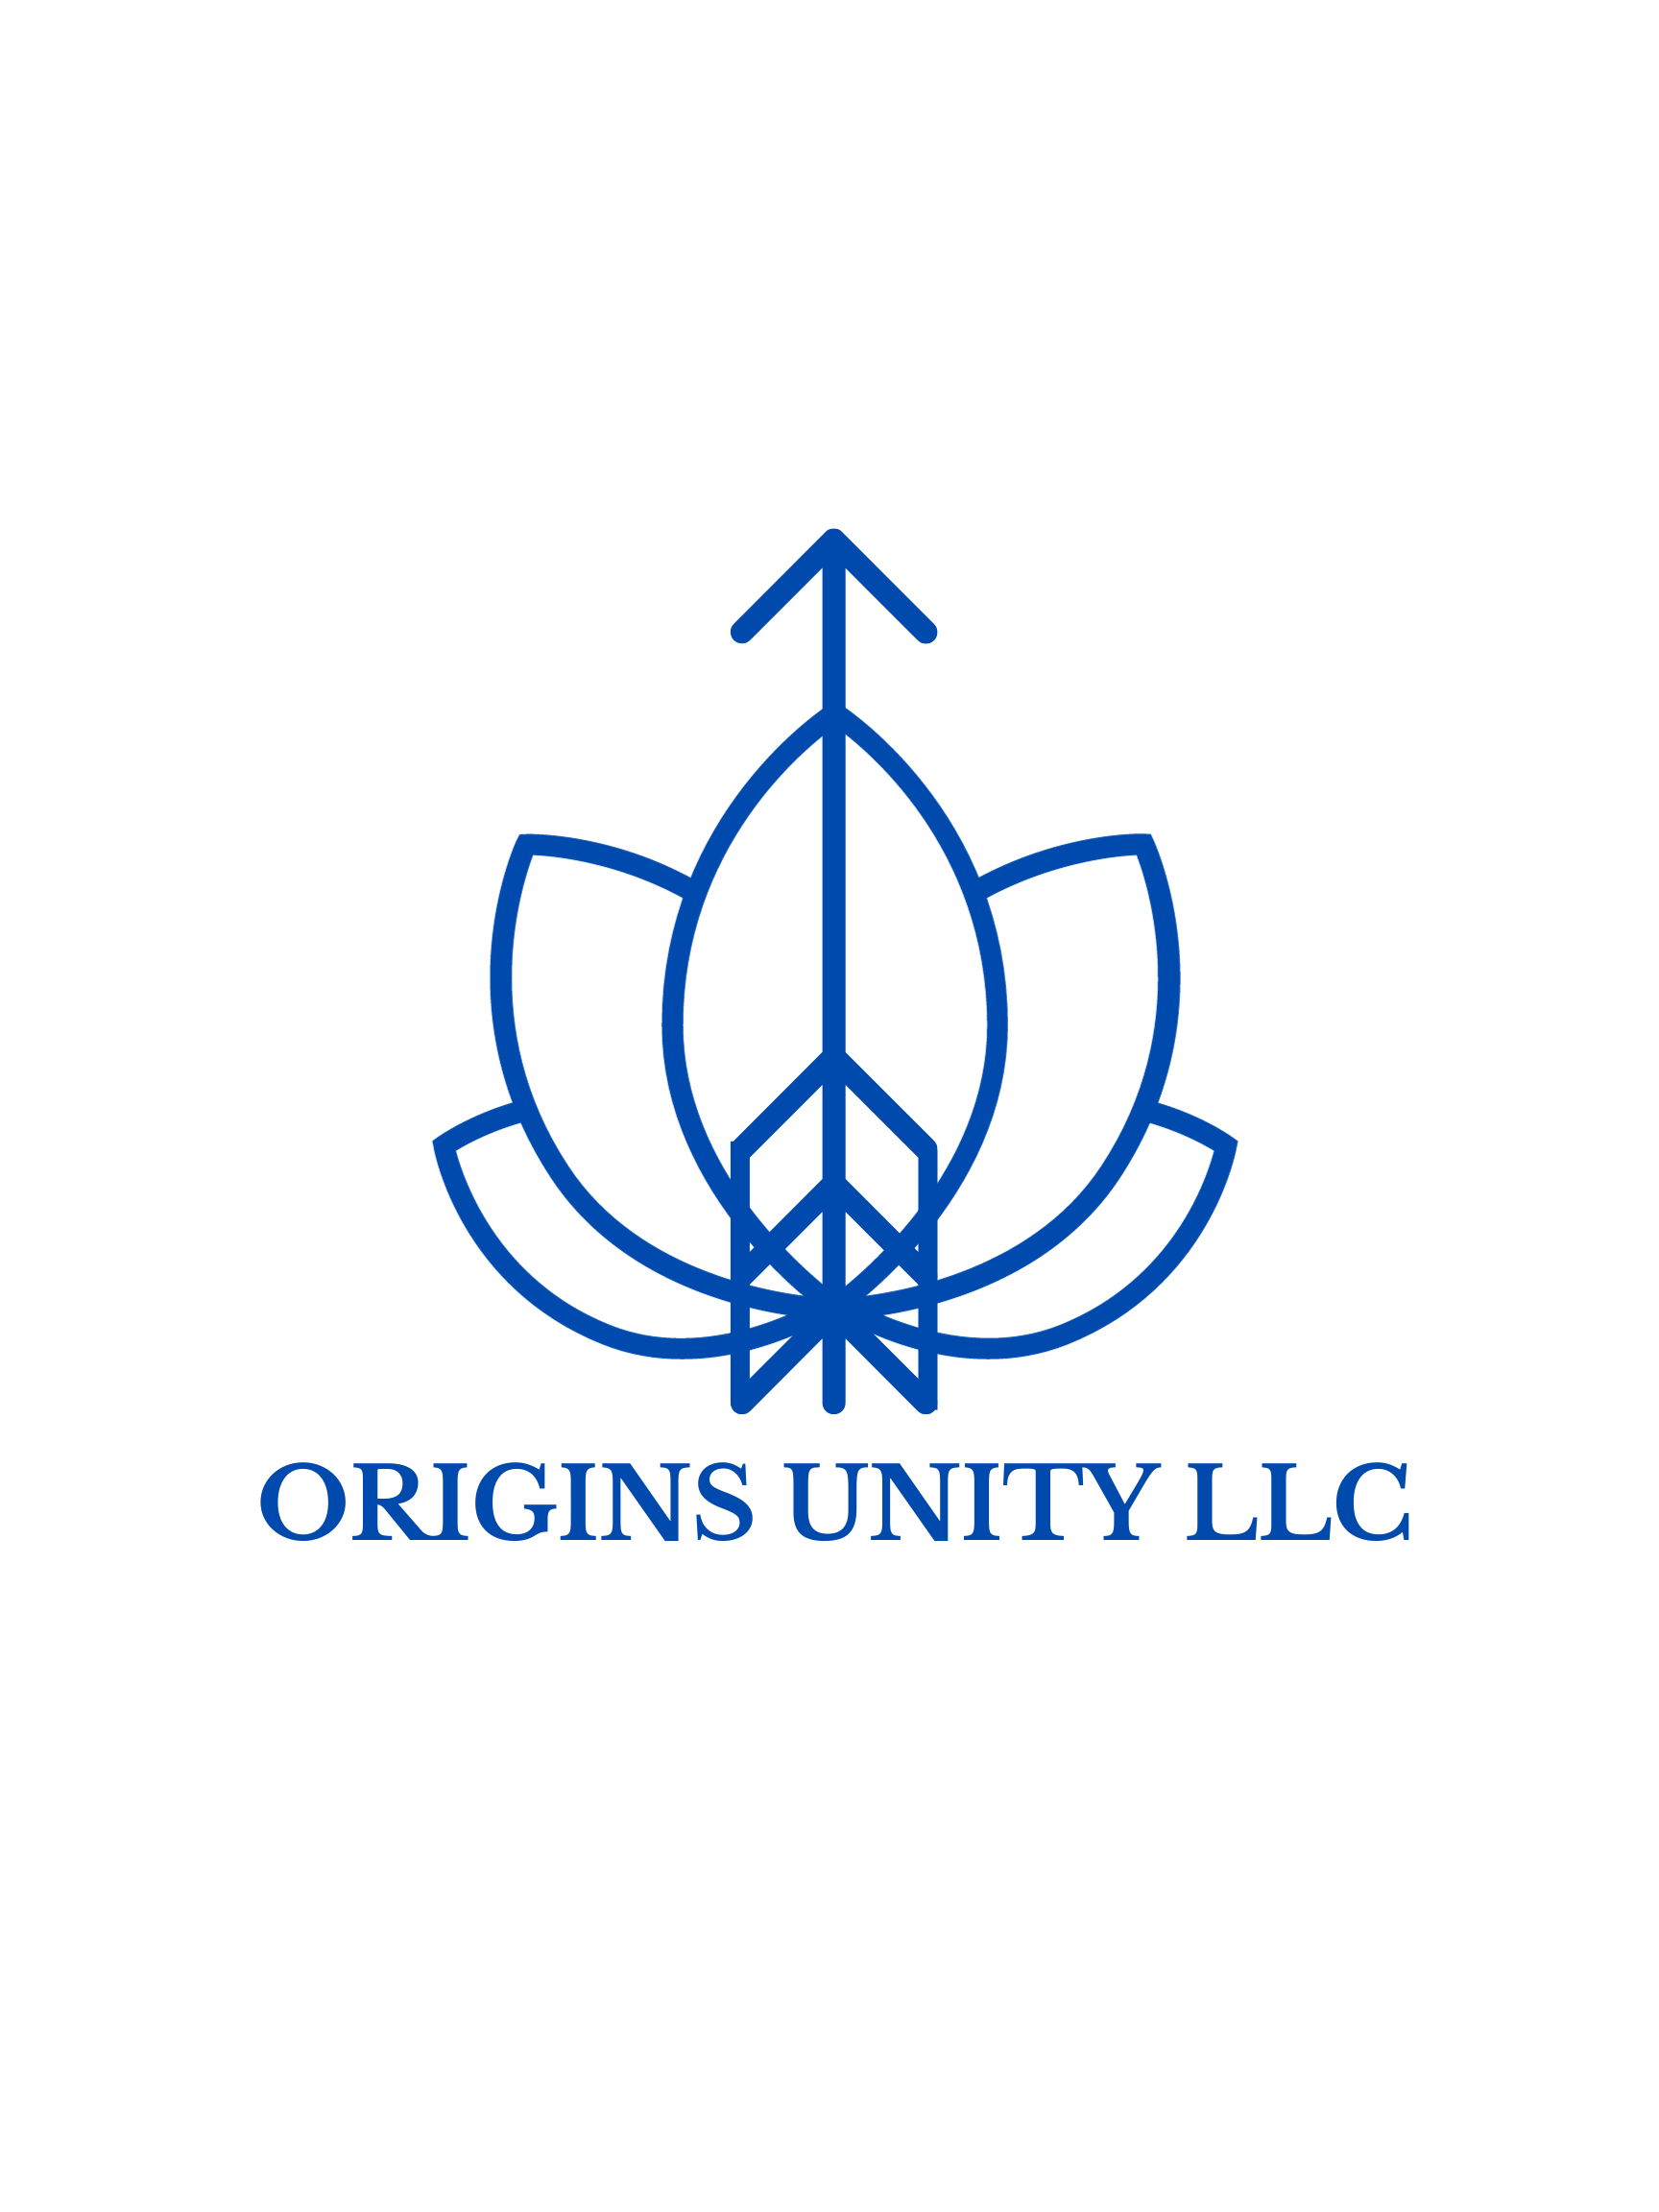 Origins Unity LLC Gym Yoga Studio Meditation Center